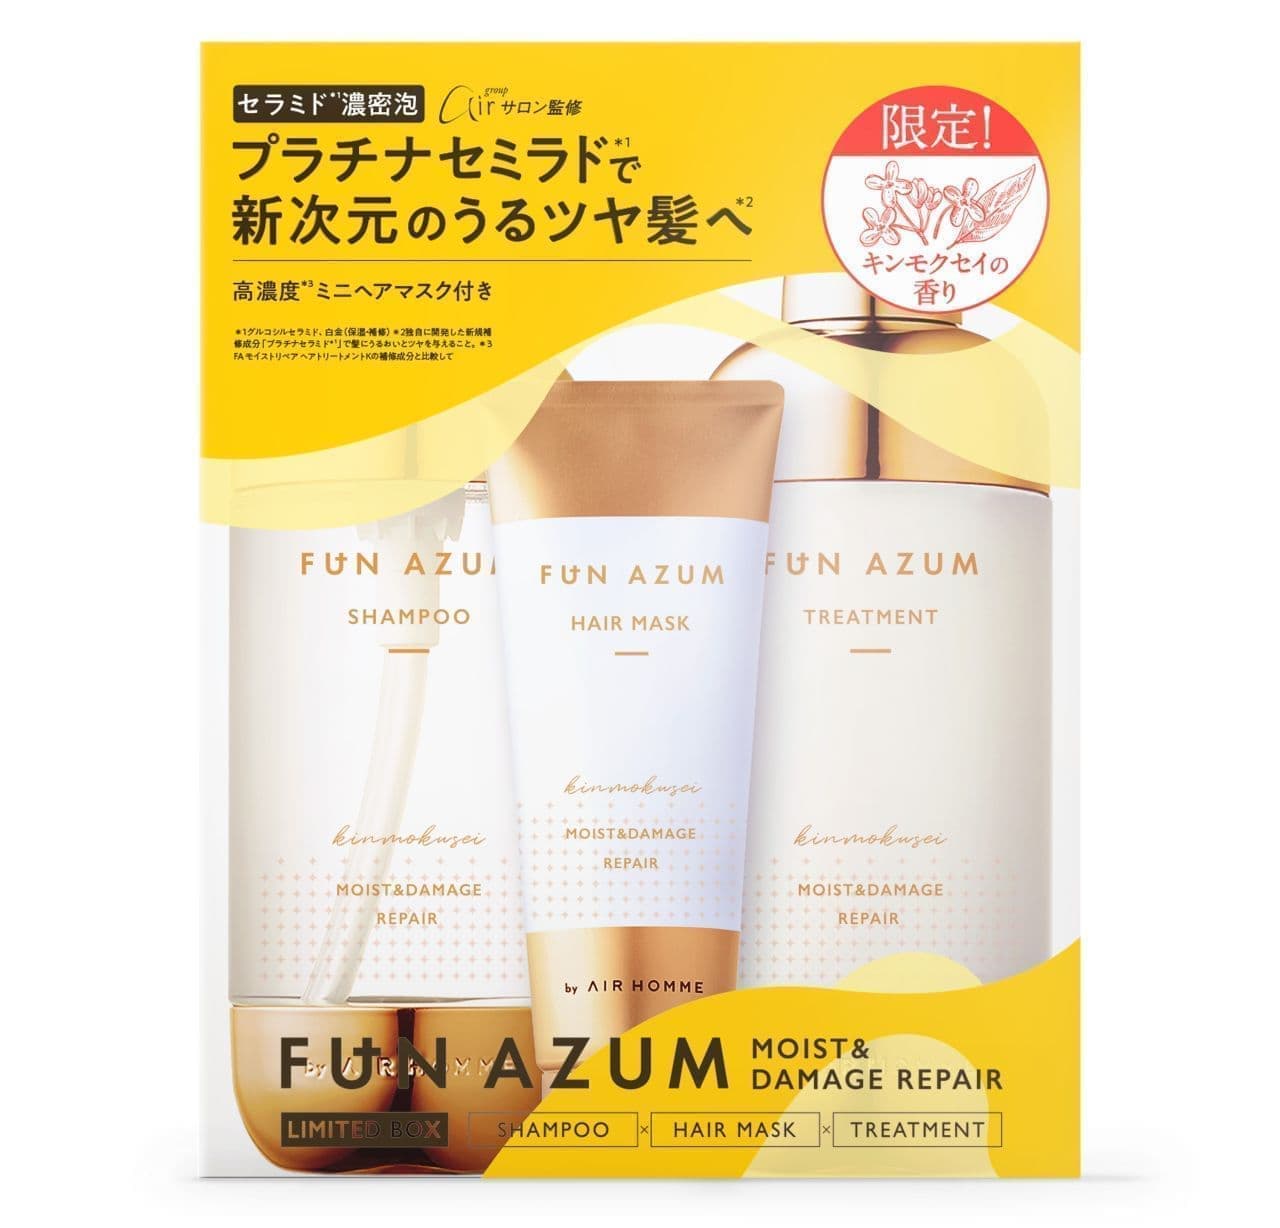 FUN AZUM Moist & Damage Repair Limited Edition Kit with Kinmokusei Mini Hair Mask